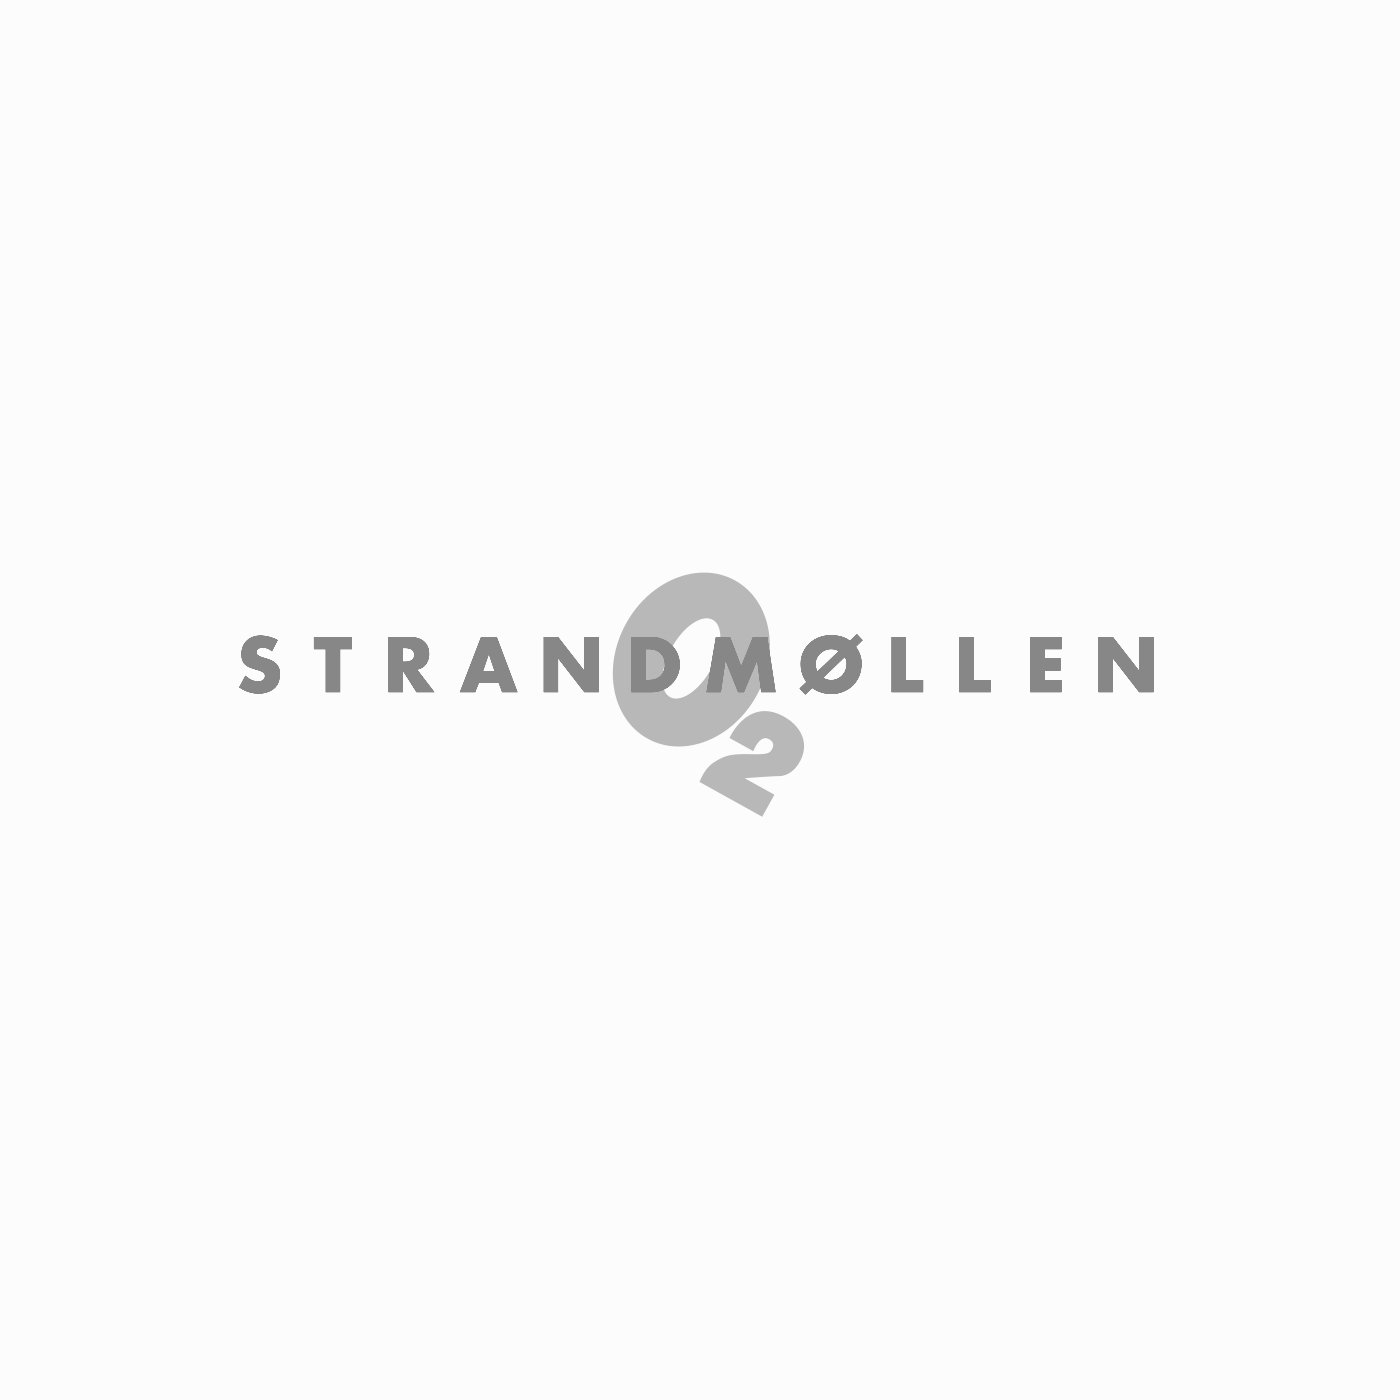 strandmollen-cases-design.jpg